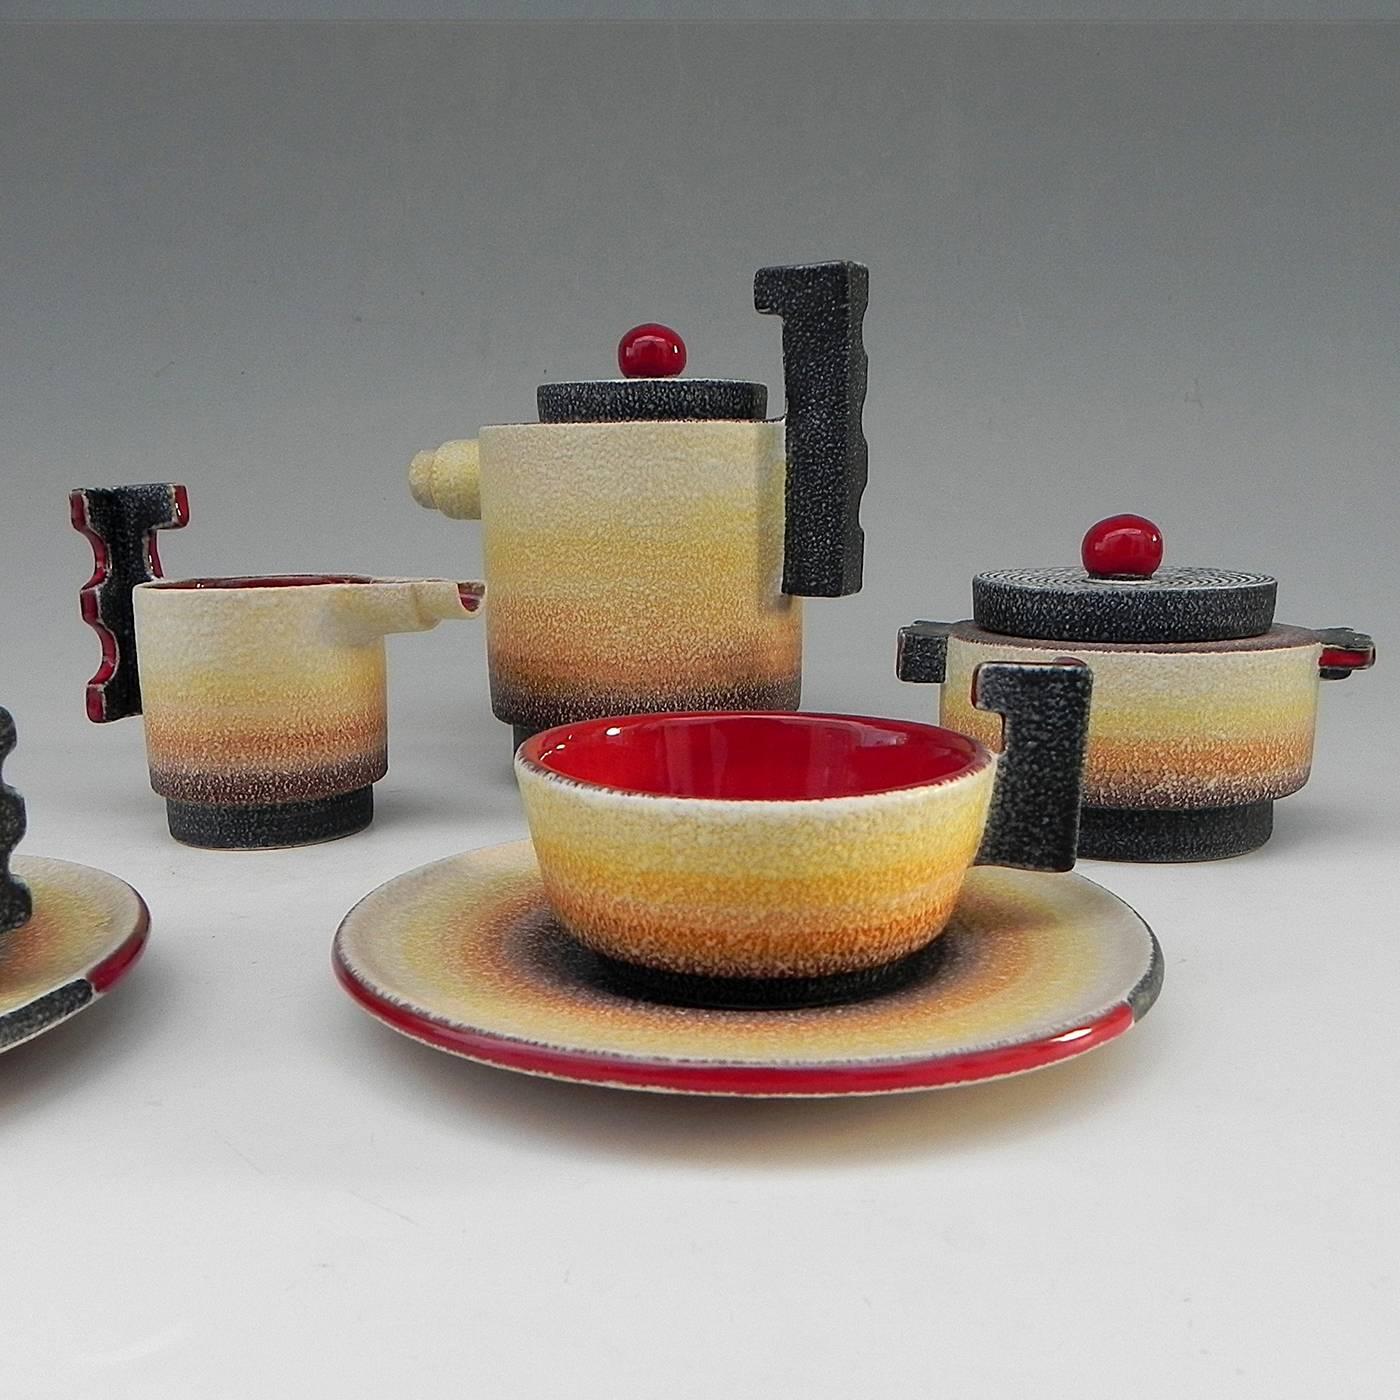 Italian Diulgheroff Futurist Ceramic Tea Set for Two by Mazzotti, 1903